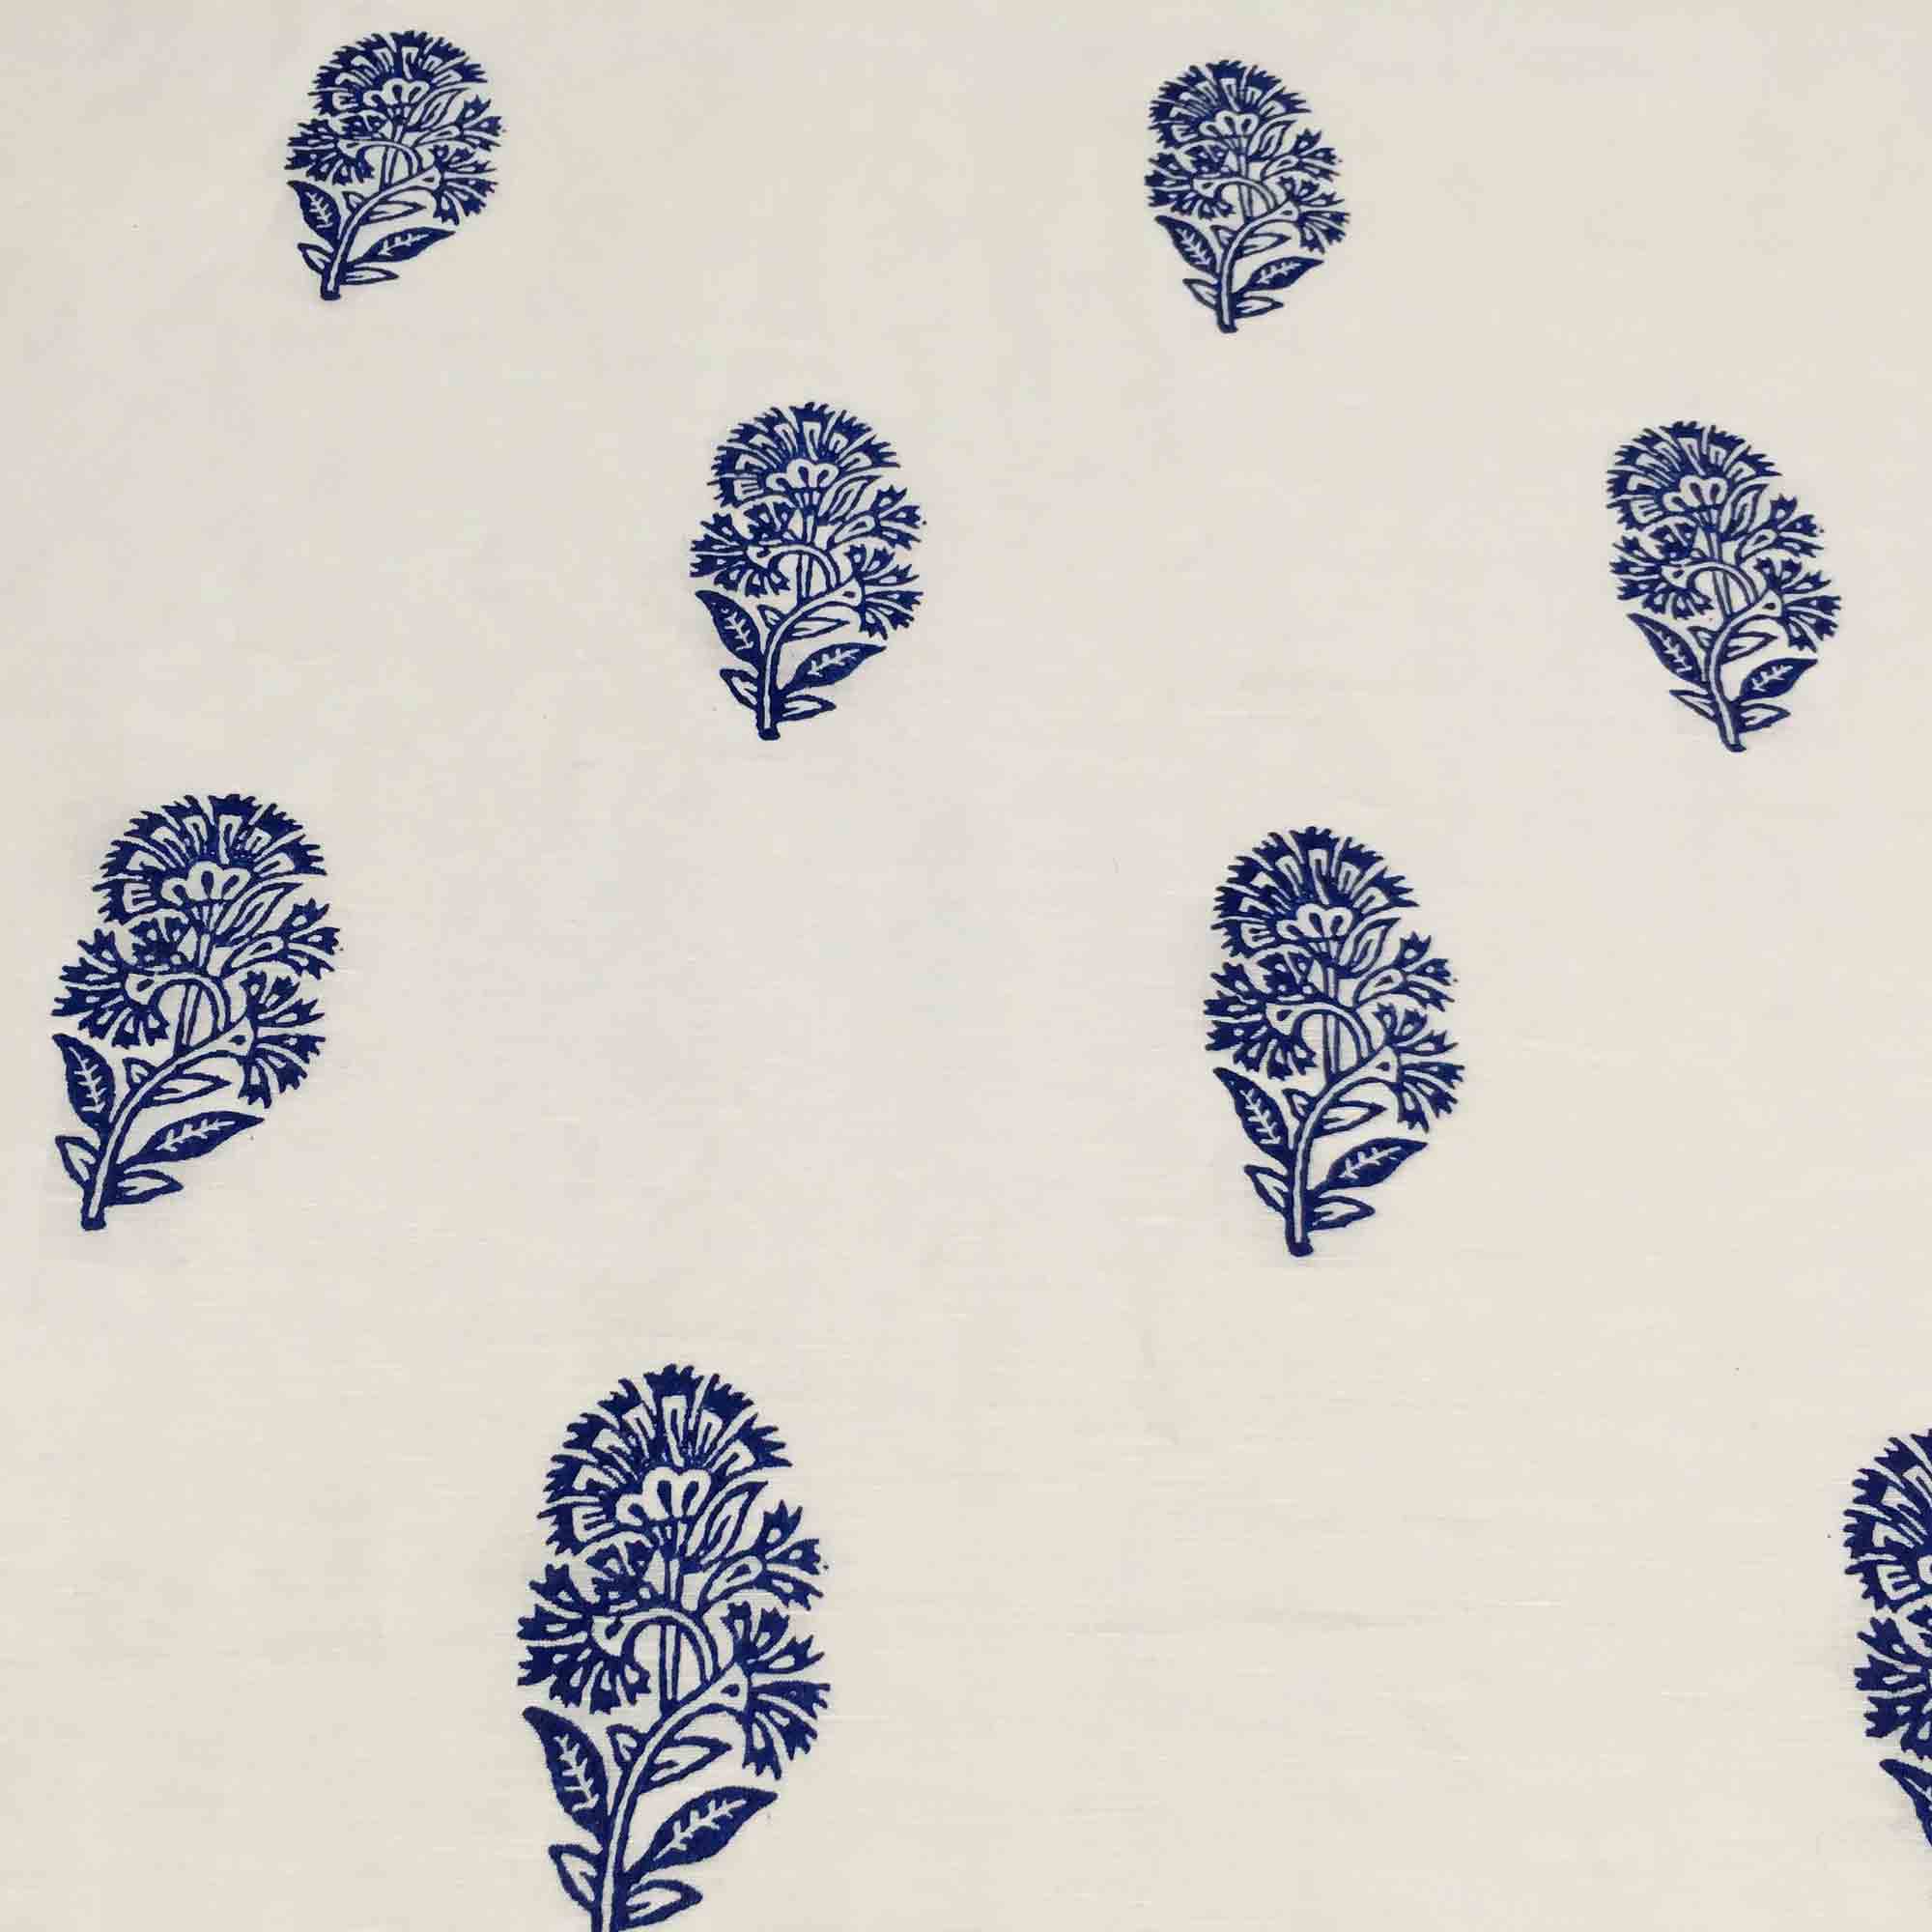 Floral Print Block Print Fabric 100% Cotton Indian Fabric, Hand